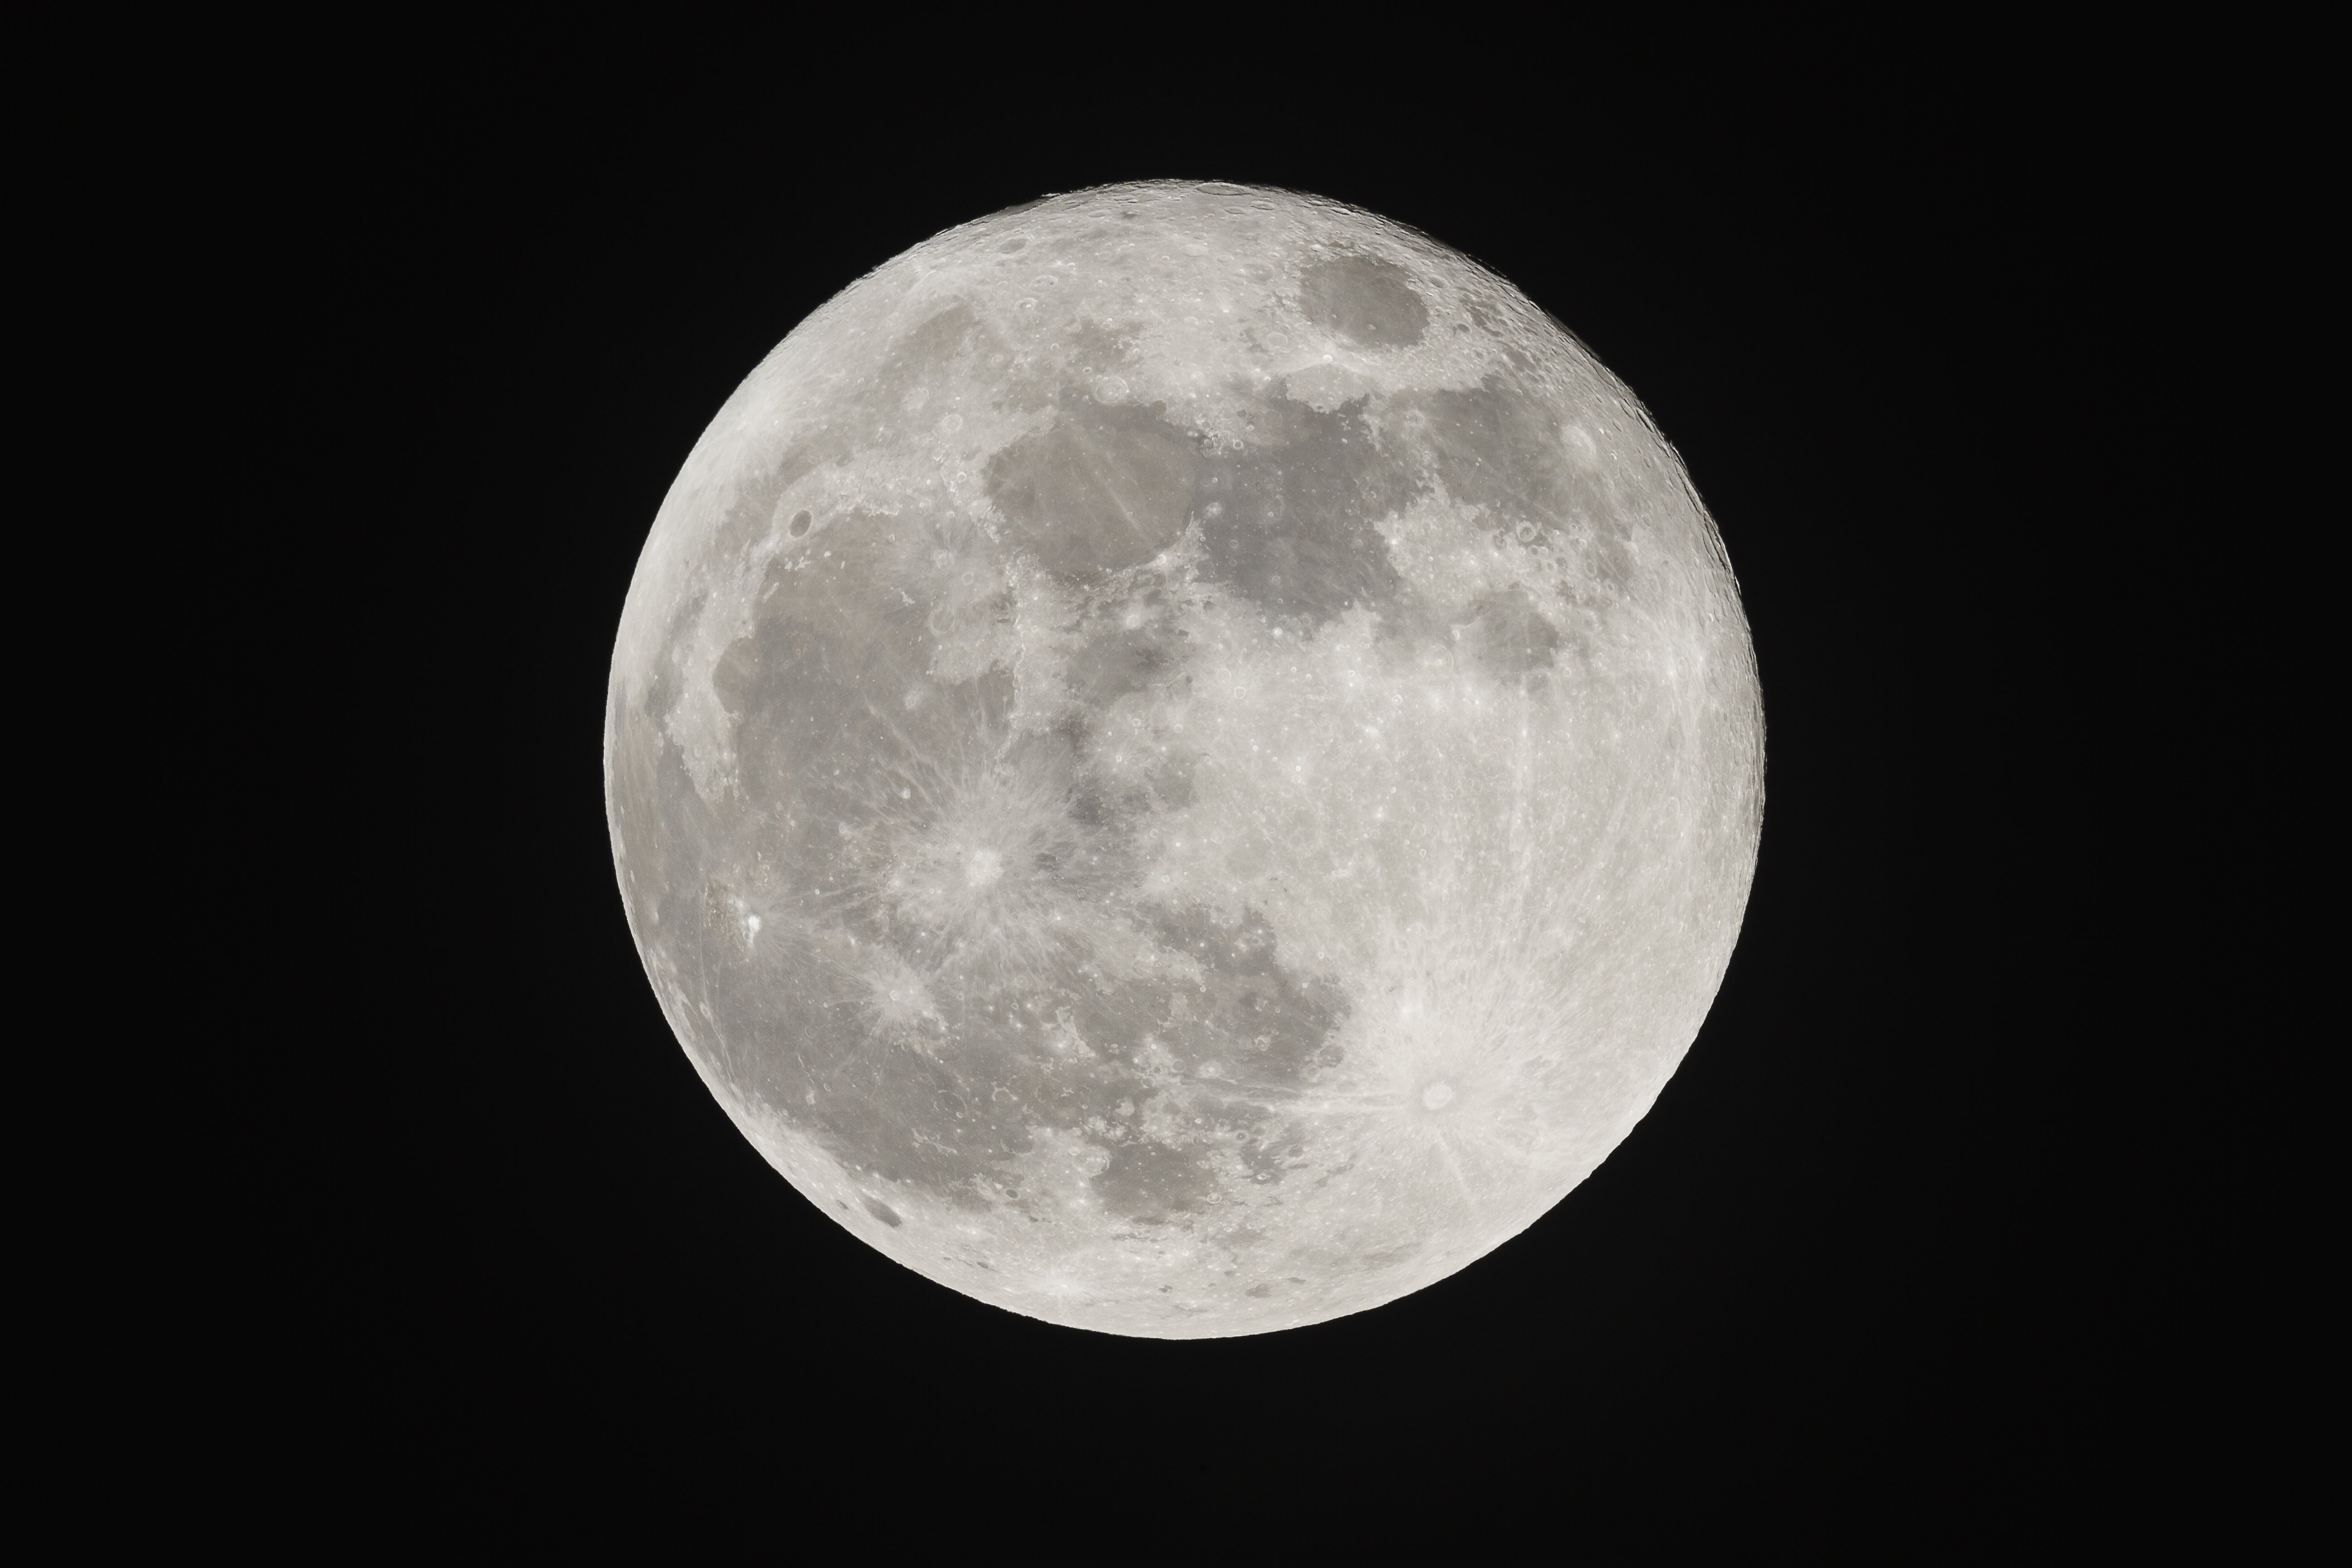 A photograph of a full moon | Source: Shutterstock